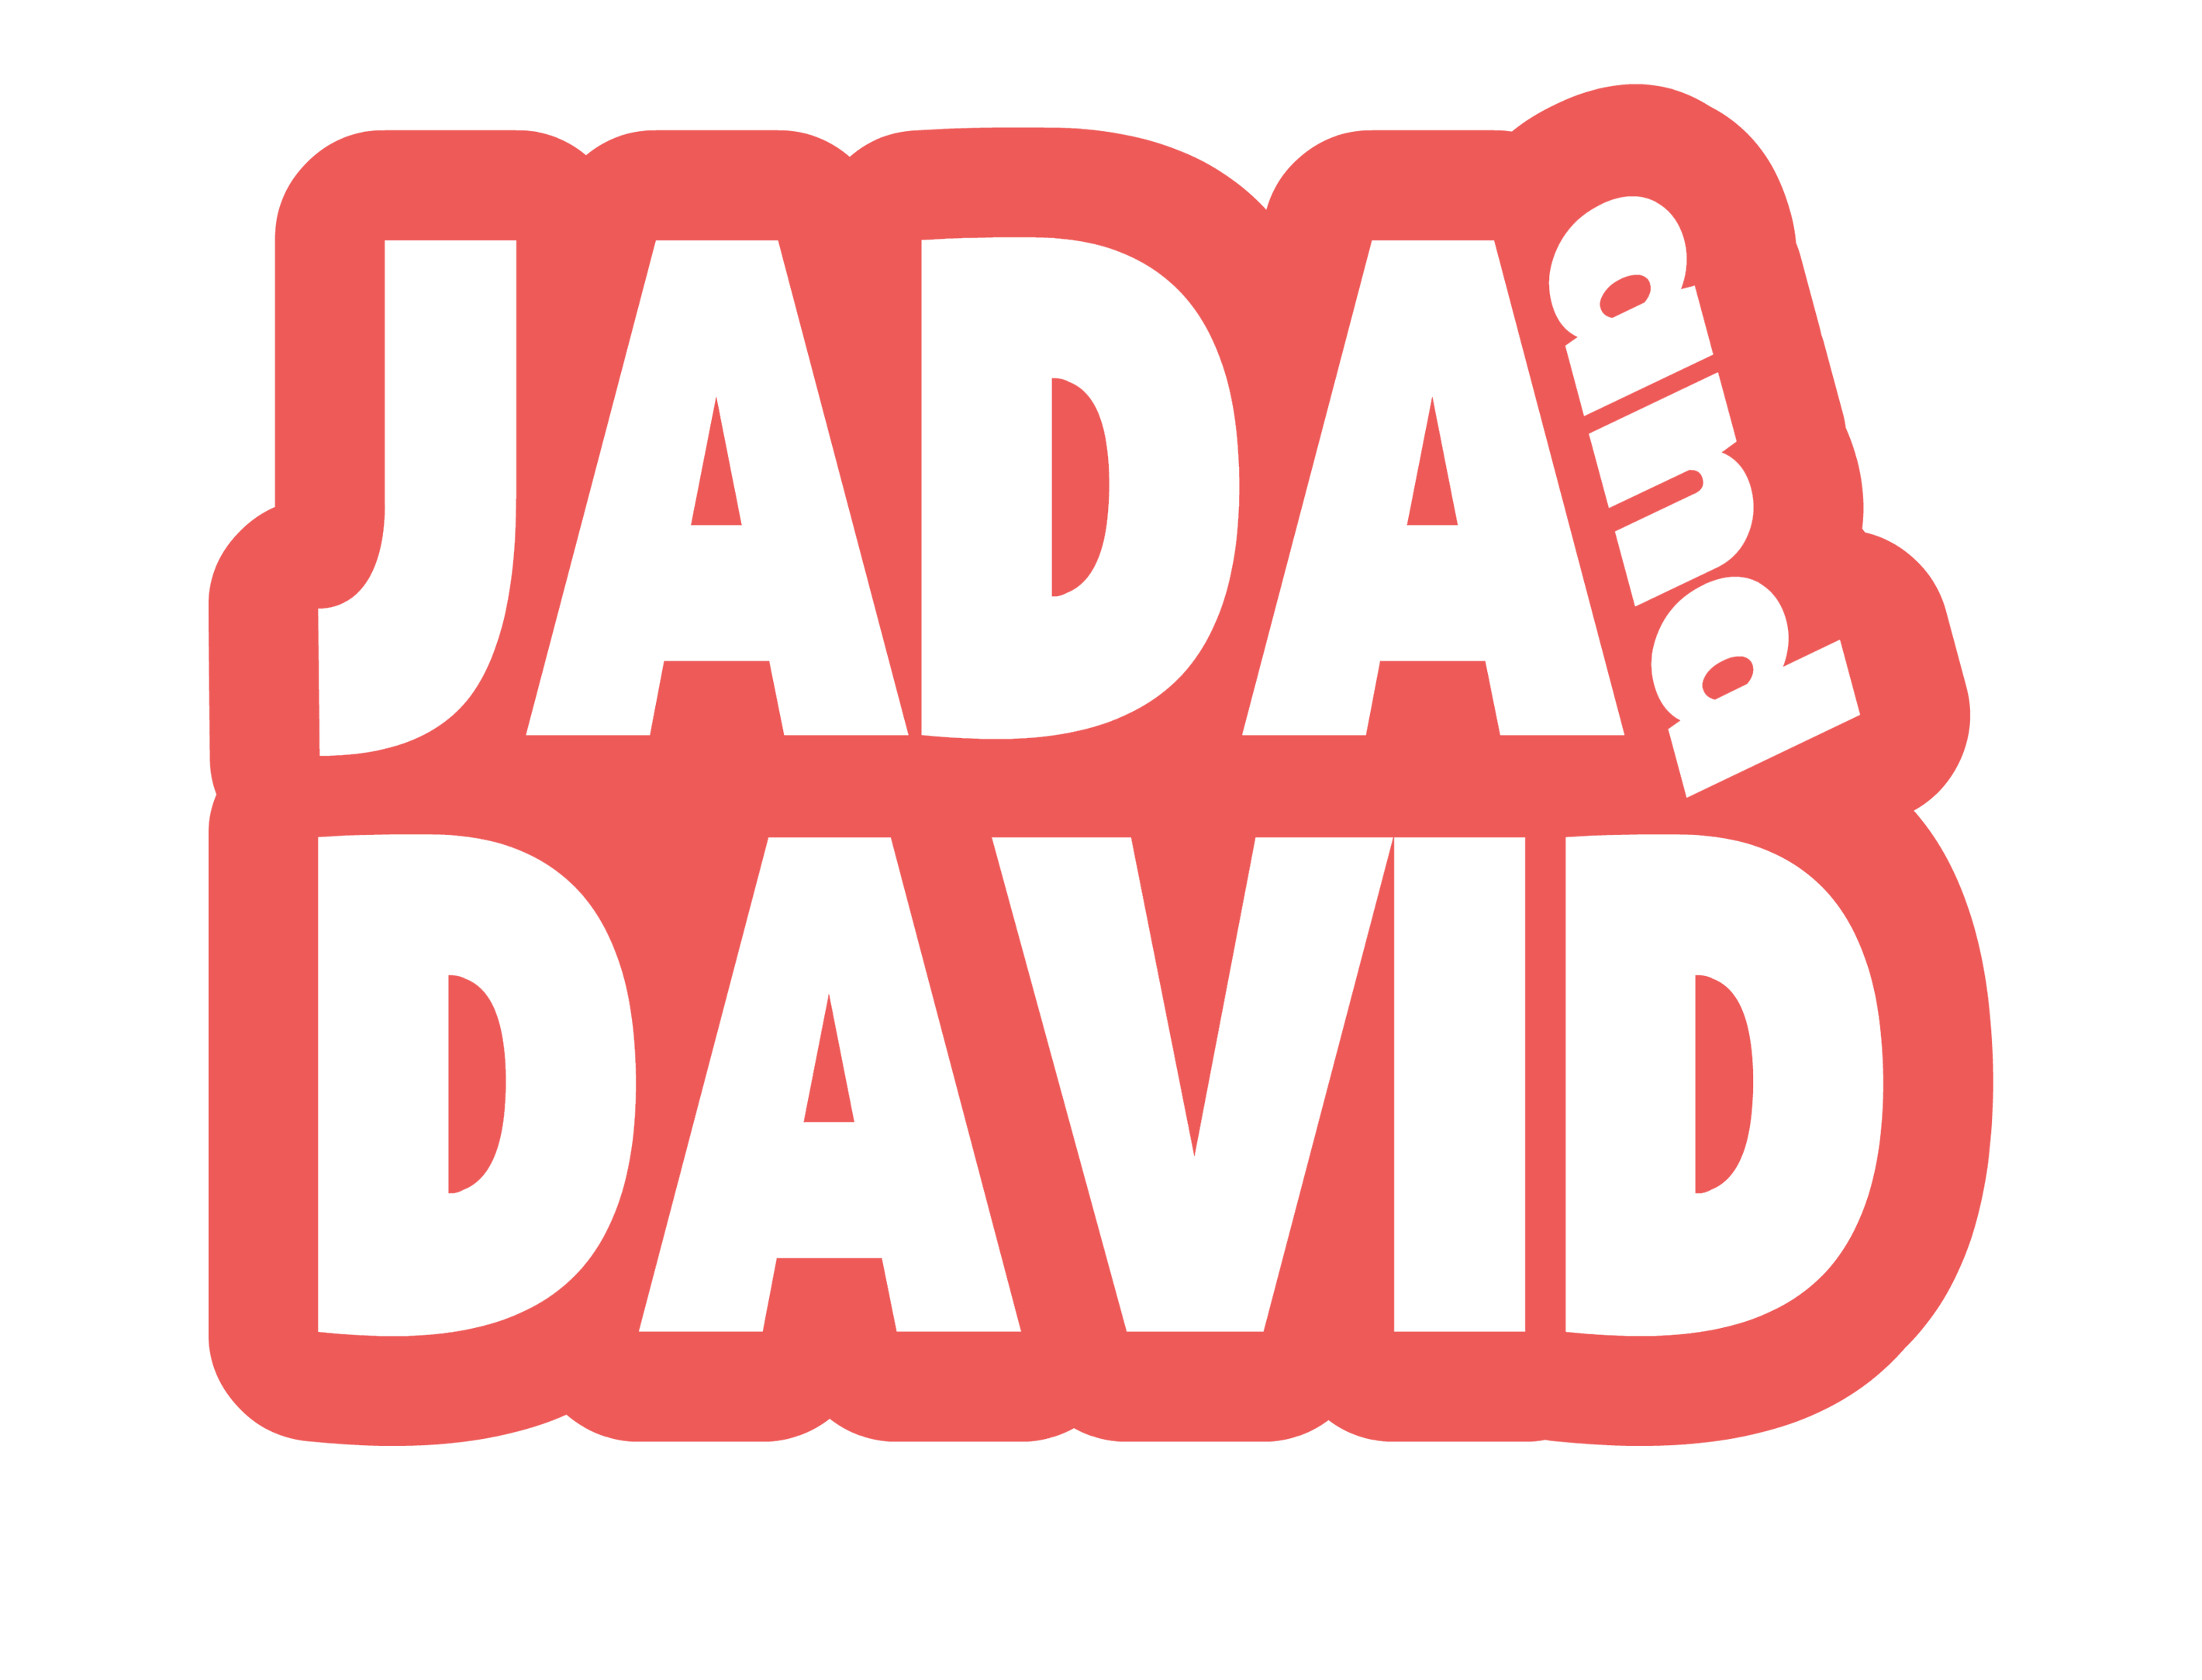 Jada and David Parrish